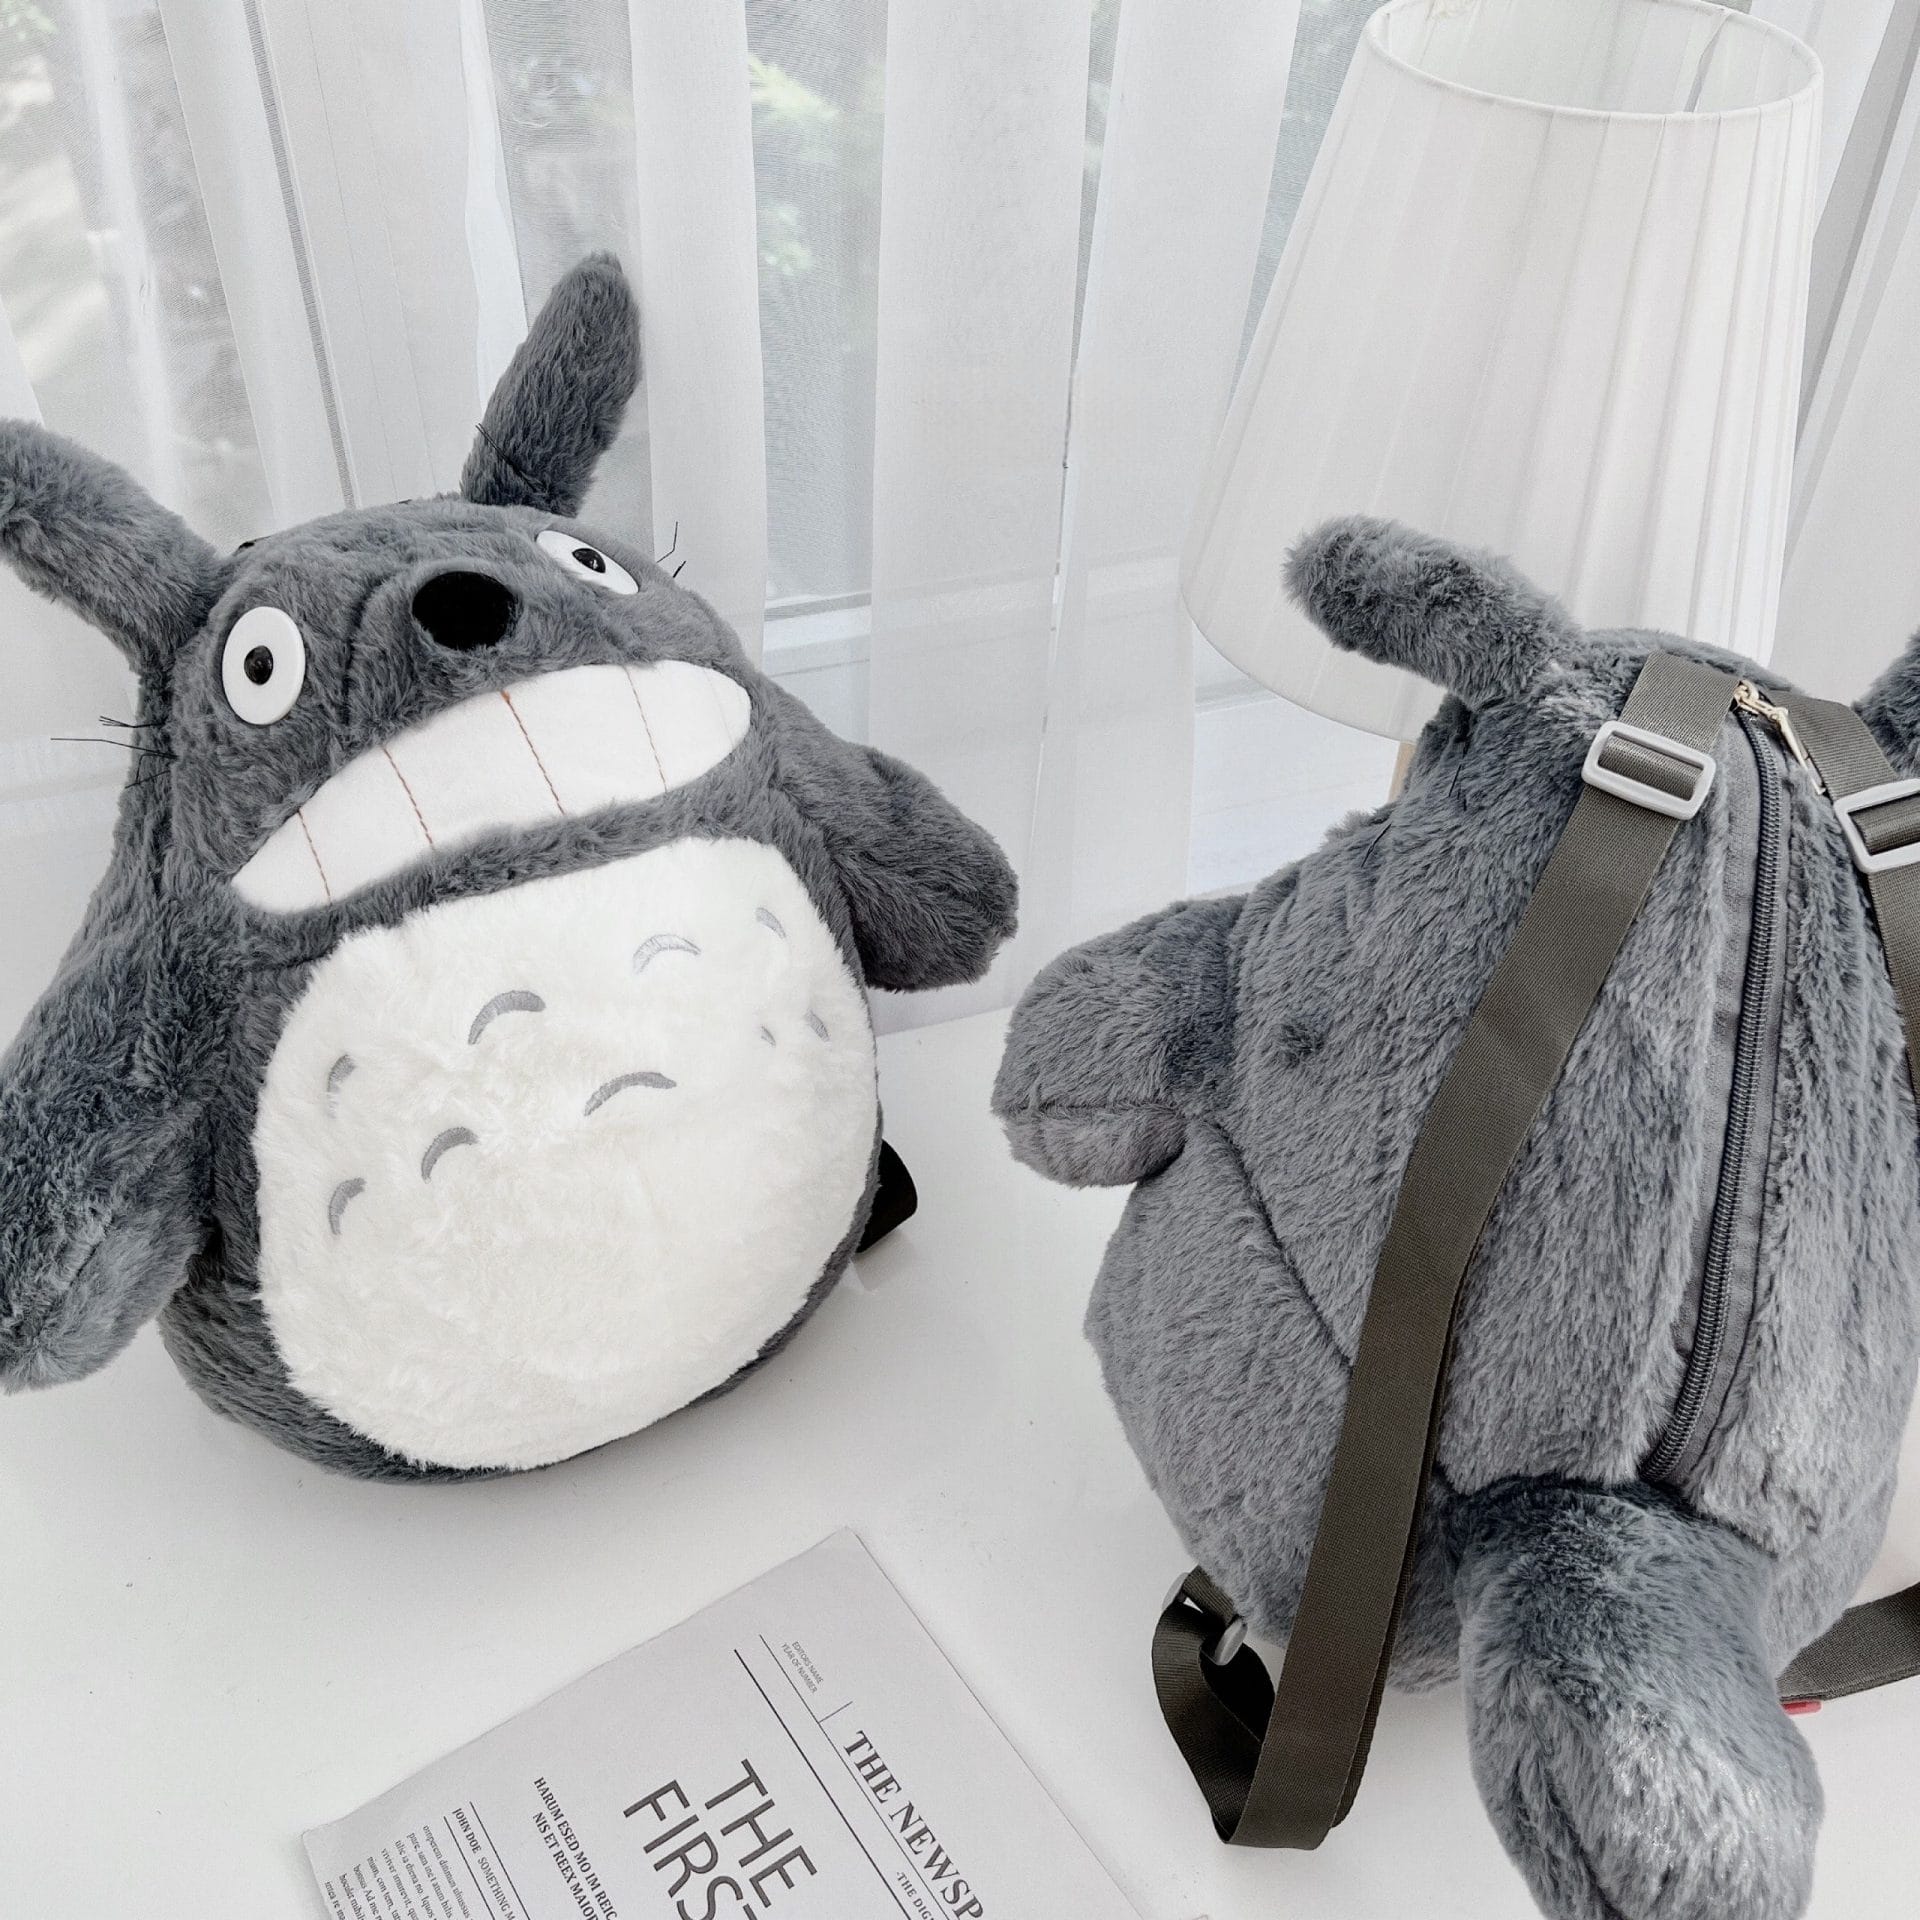 Ghibli Toy, Totoro Plush & Figurines